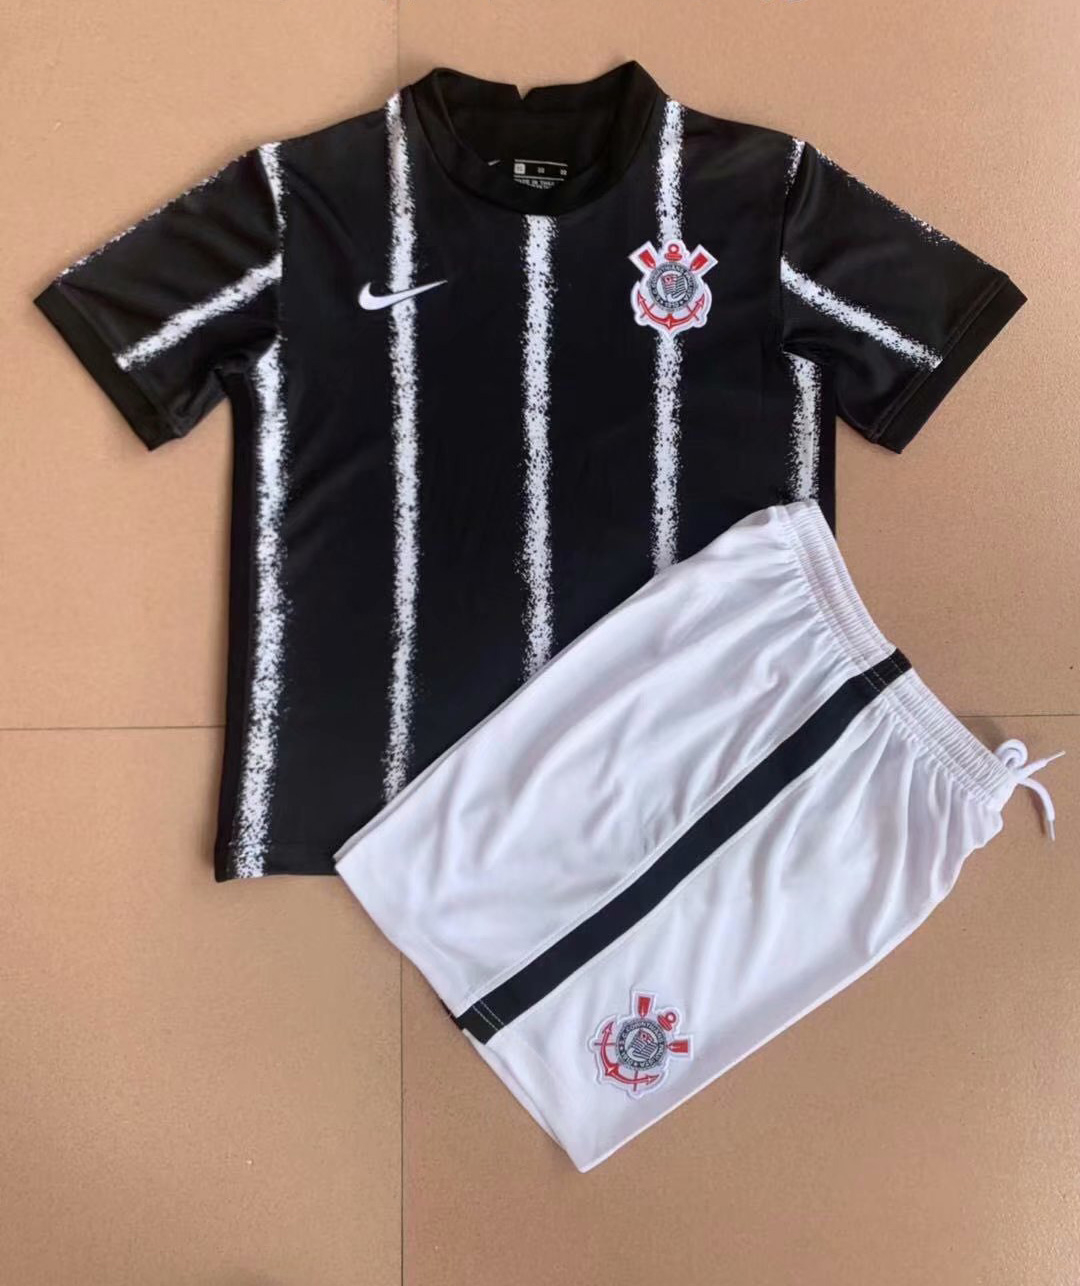 Corinthians 2021/22 Away Soccer Kit (Jersey + Shorts) Kids